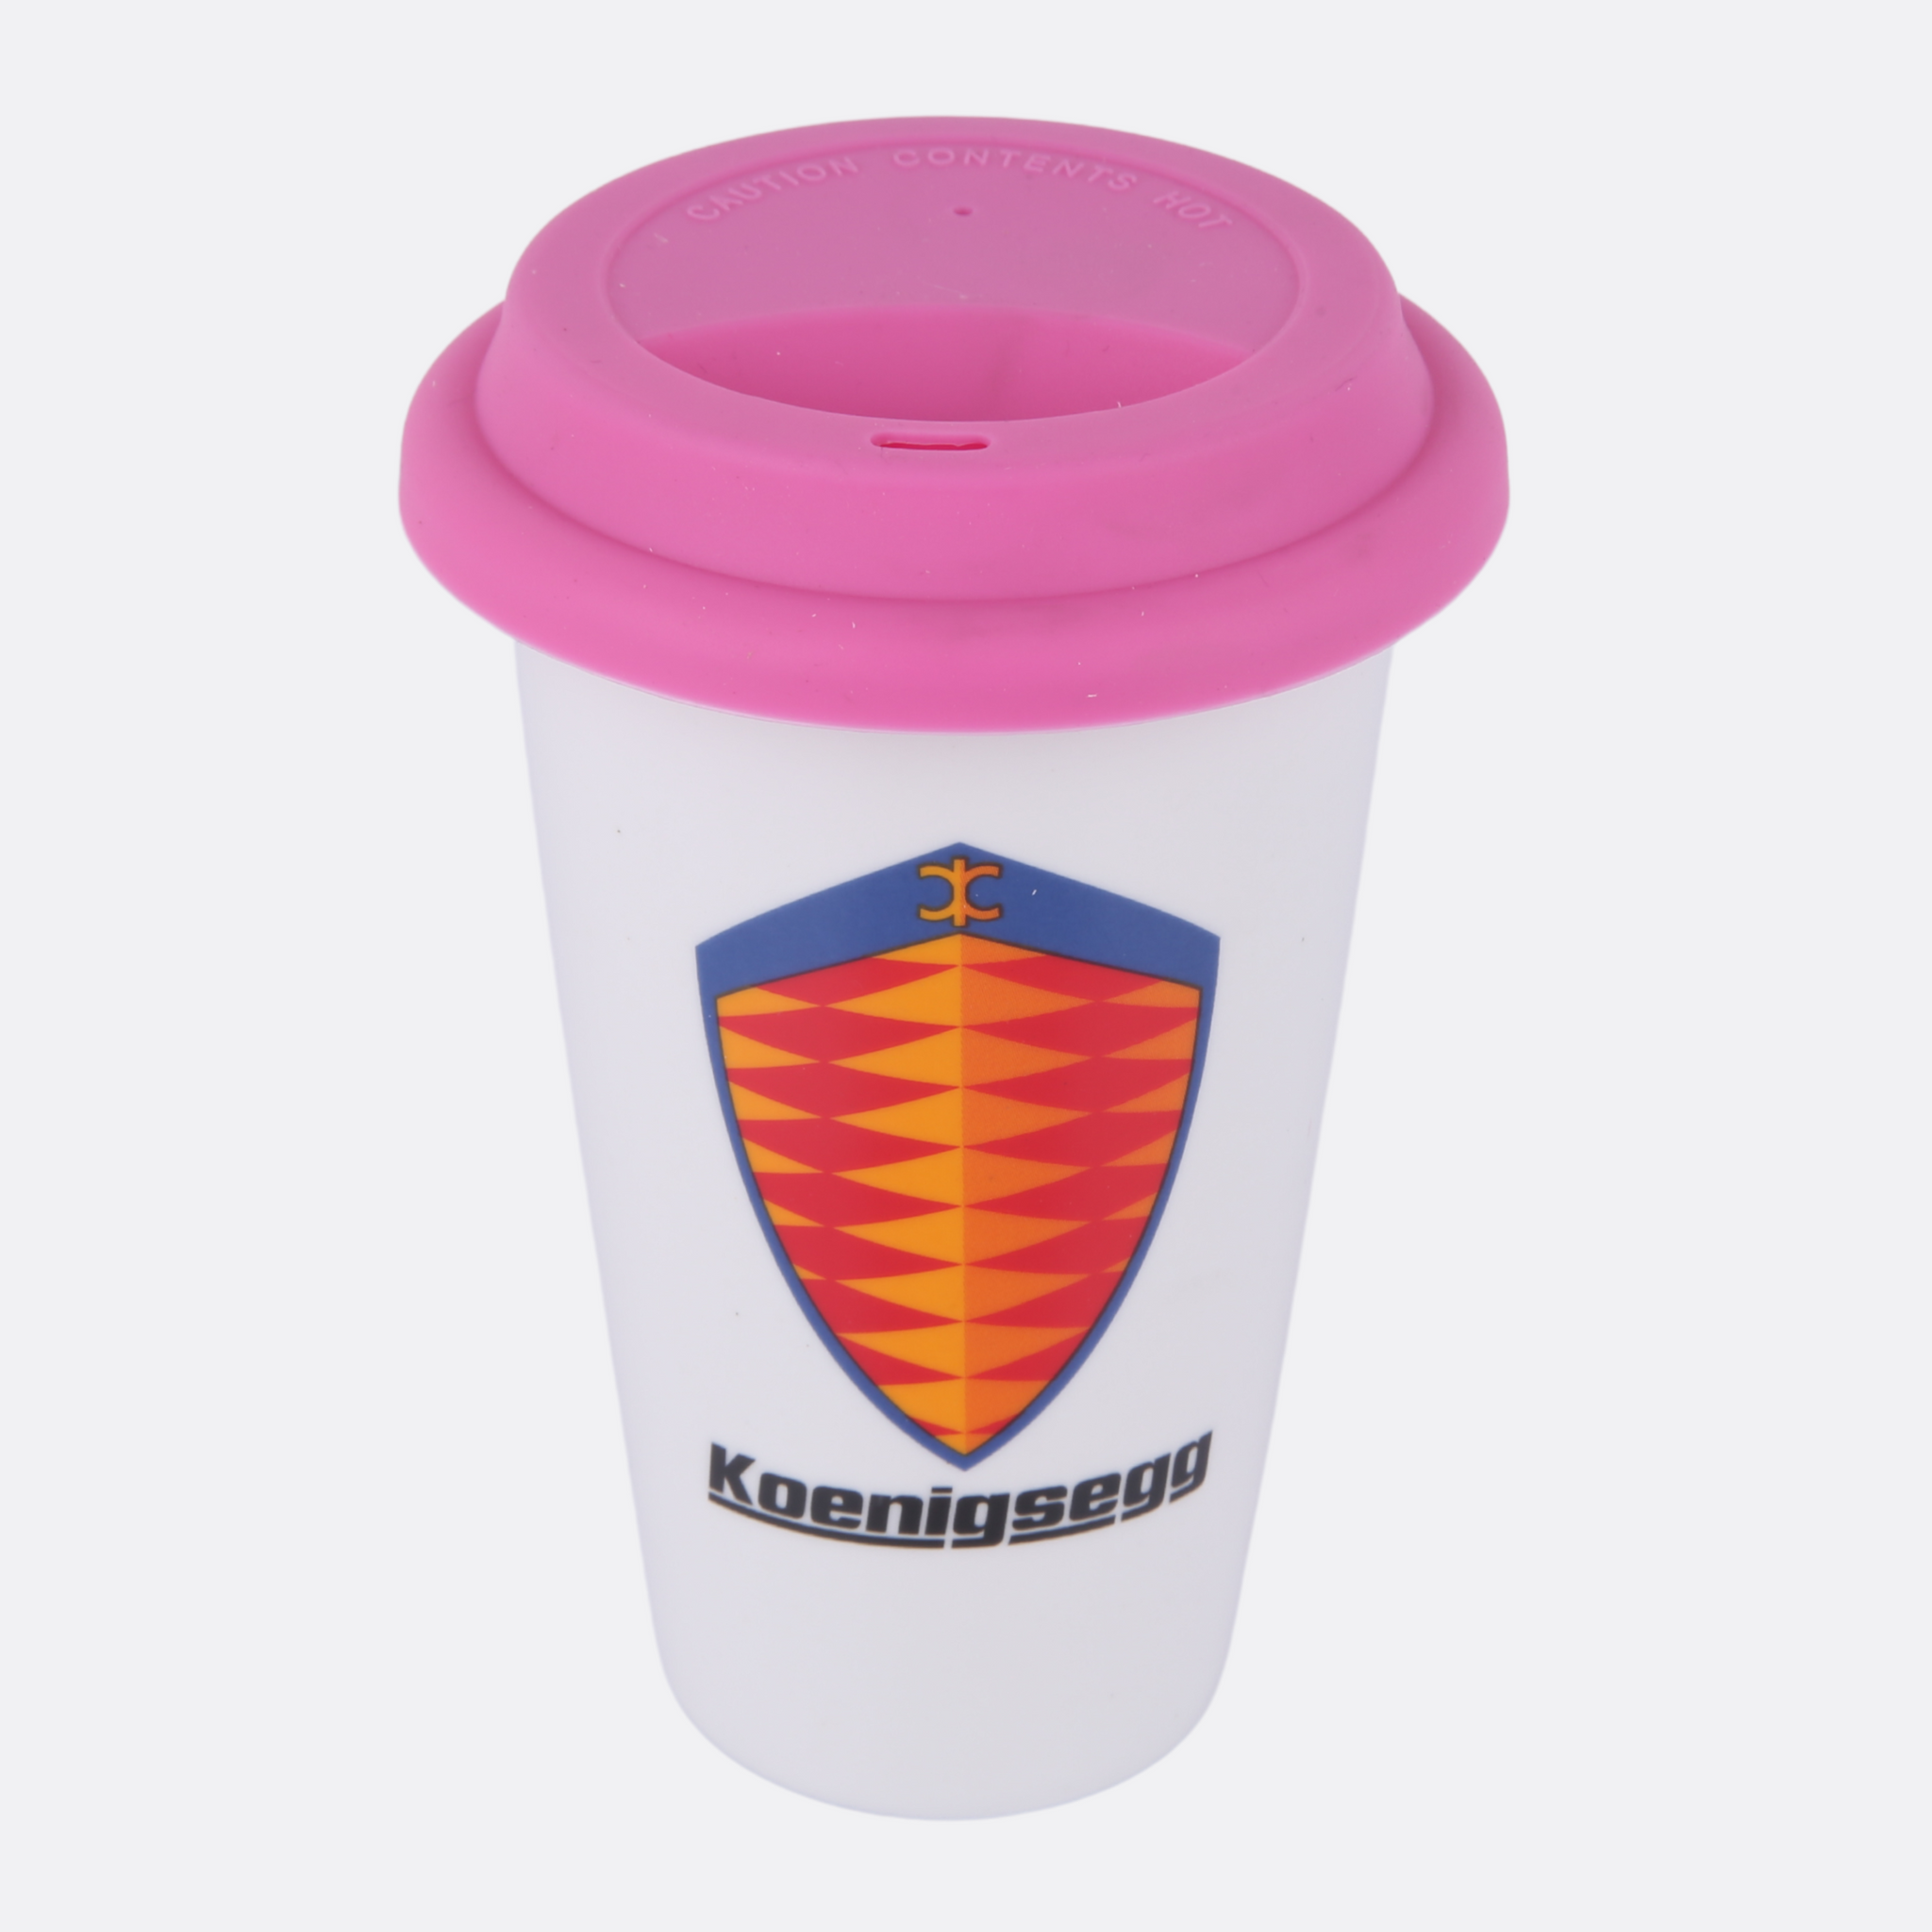 Koenigsegg Ceramic Mug